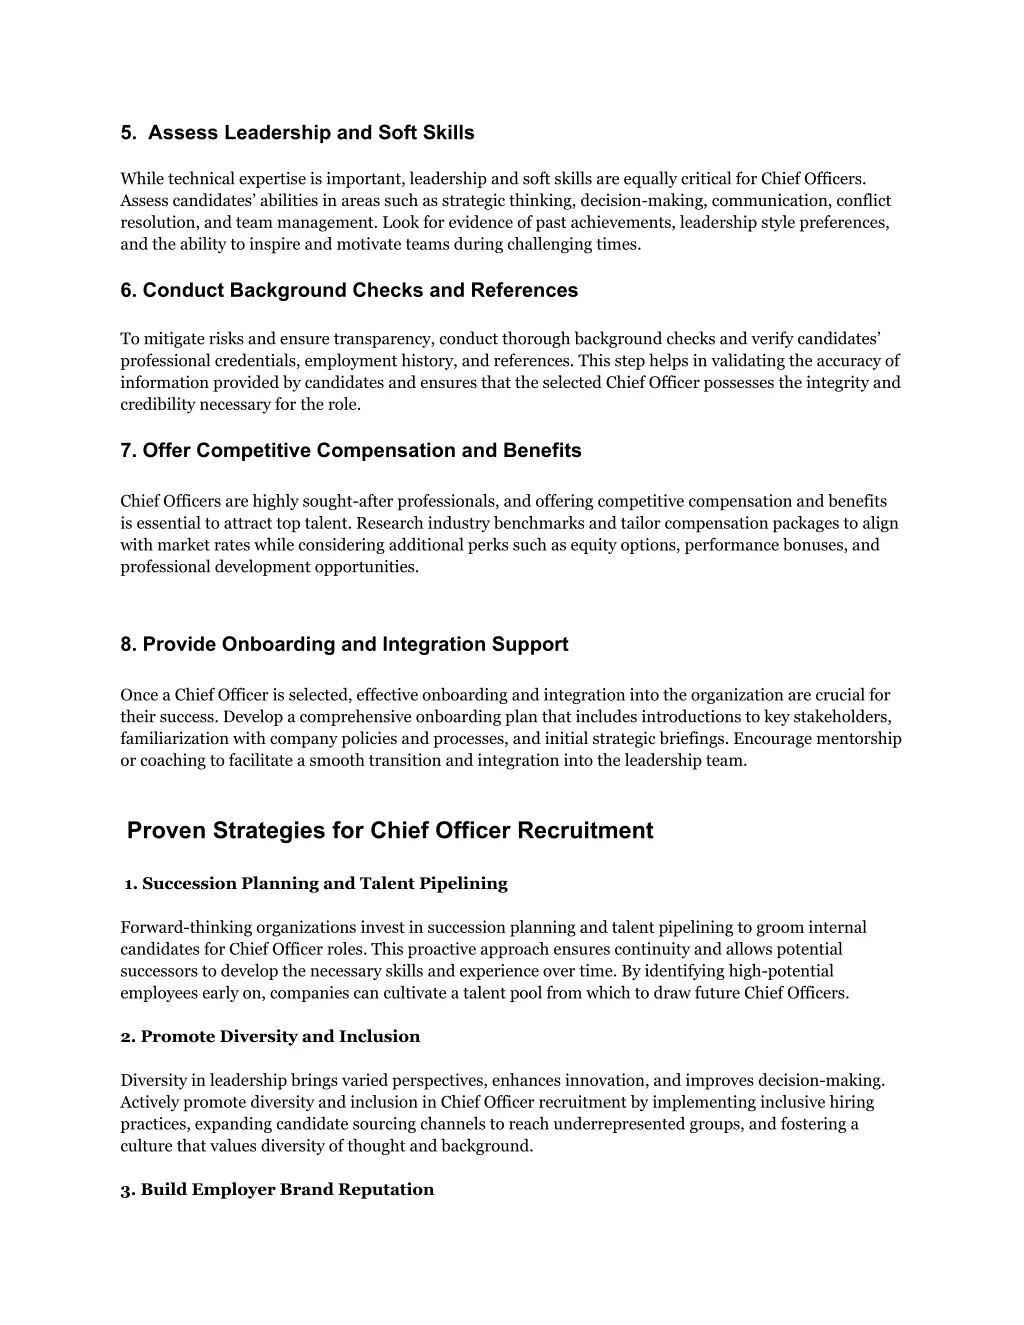 5 assess leadership and soft skills